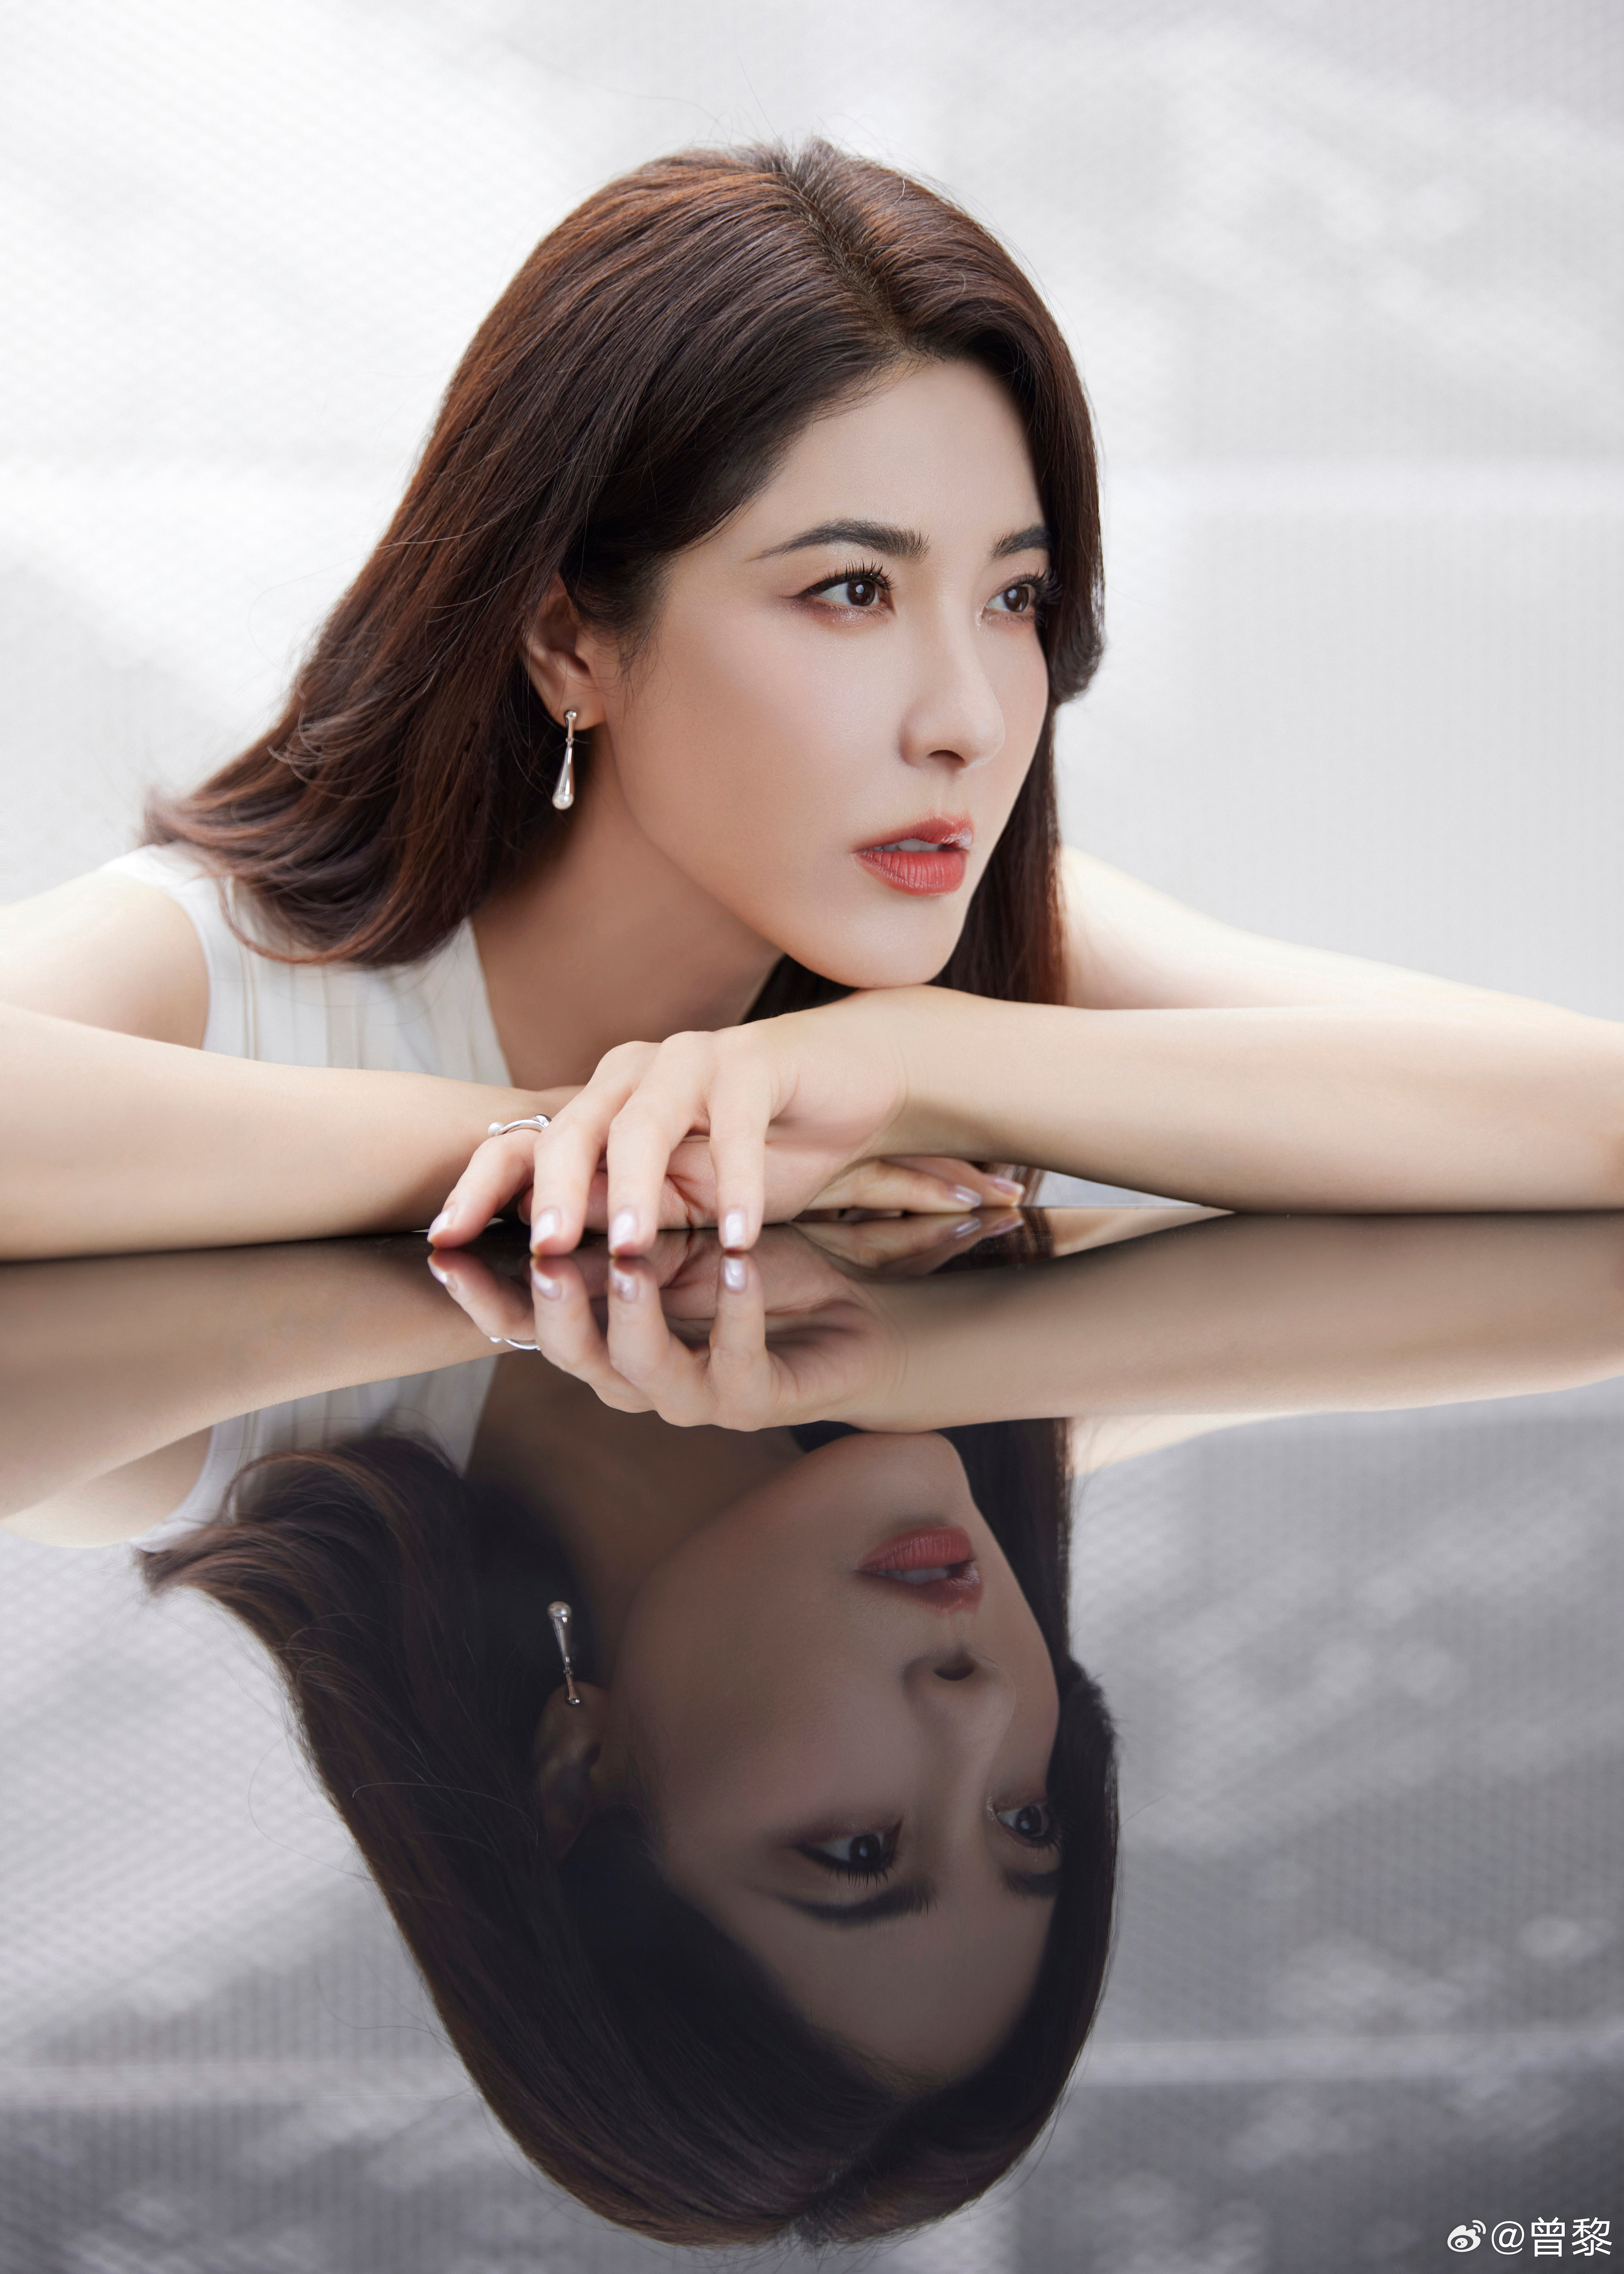 Asian Women Looking At Viewer Closed Eyes Zeng Li Actress 5342x7479